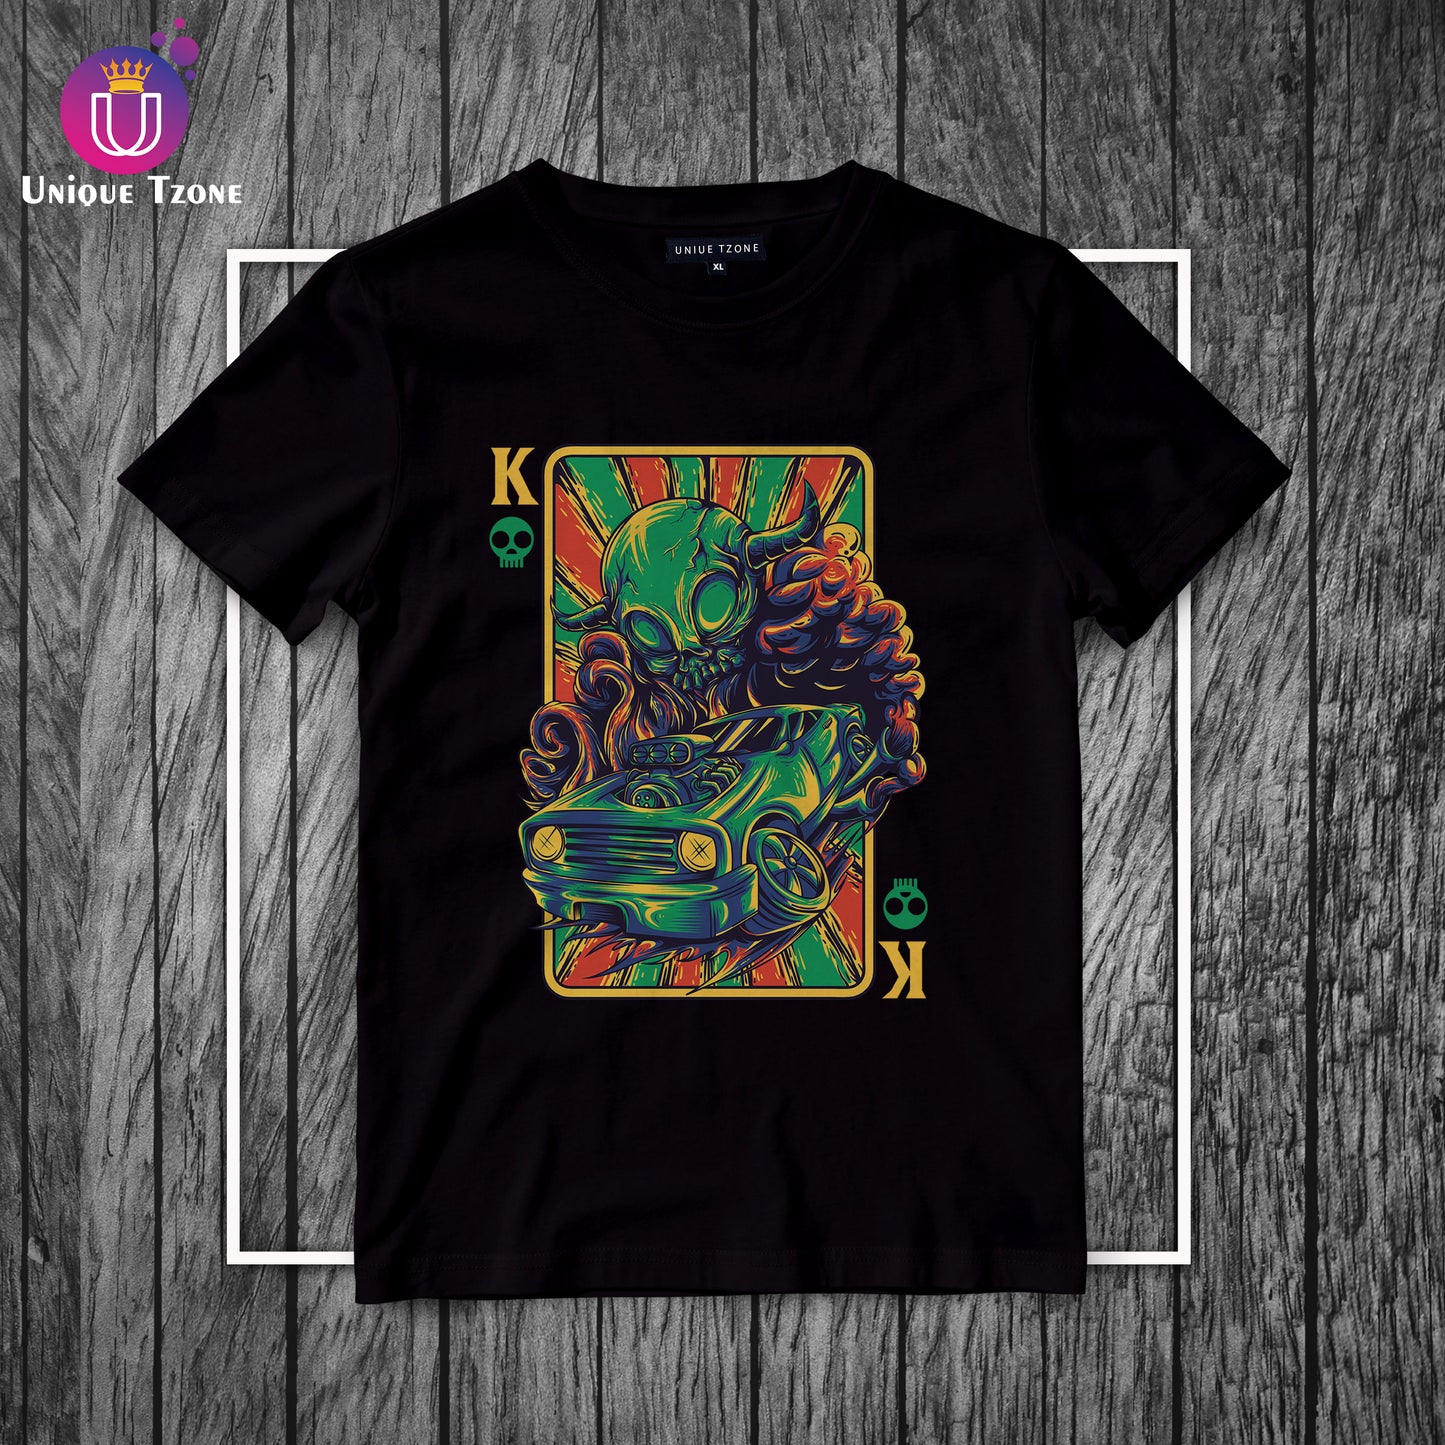 The King Urban Graphics Half Sleeve T-shirt